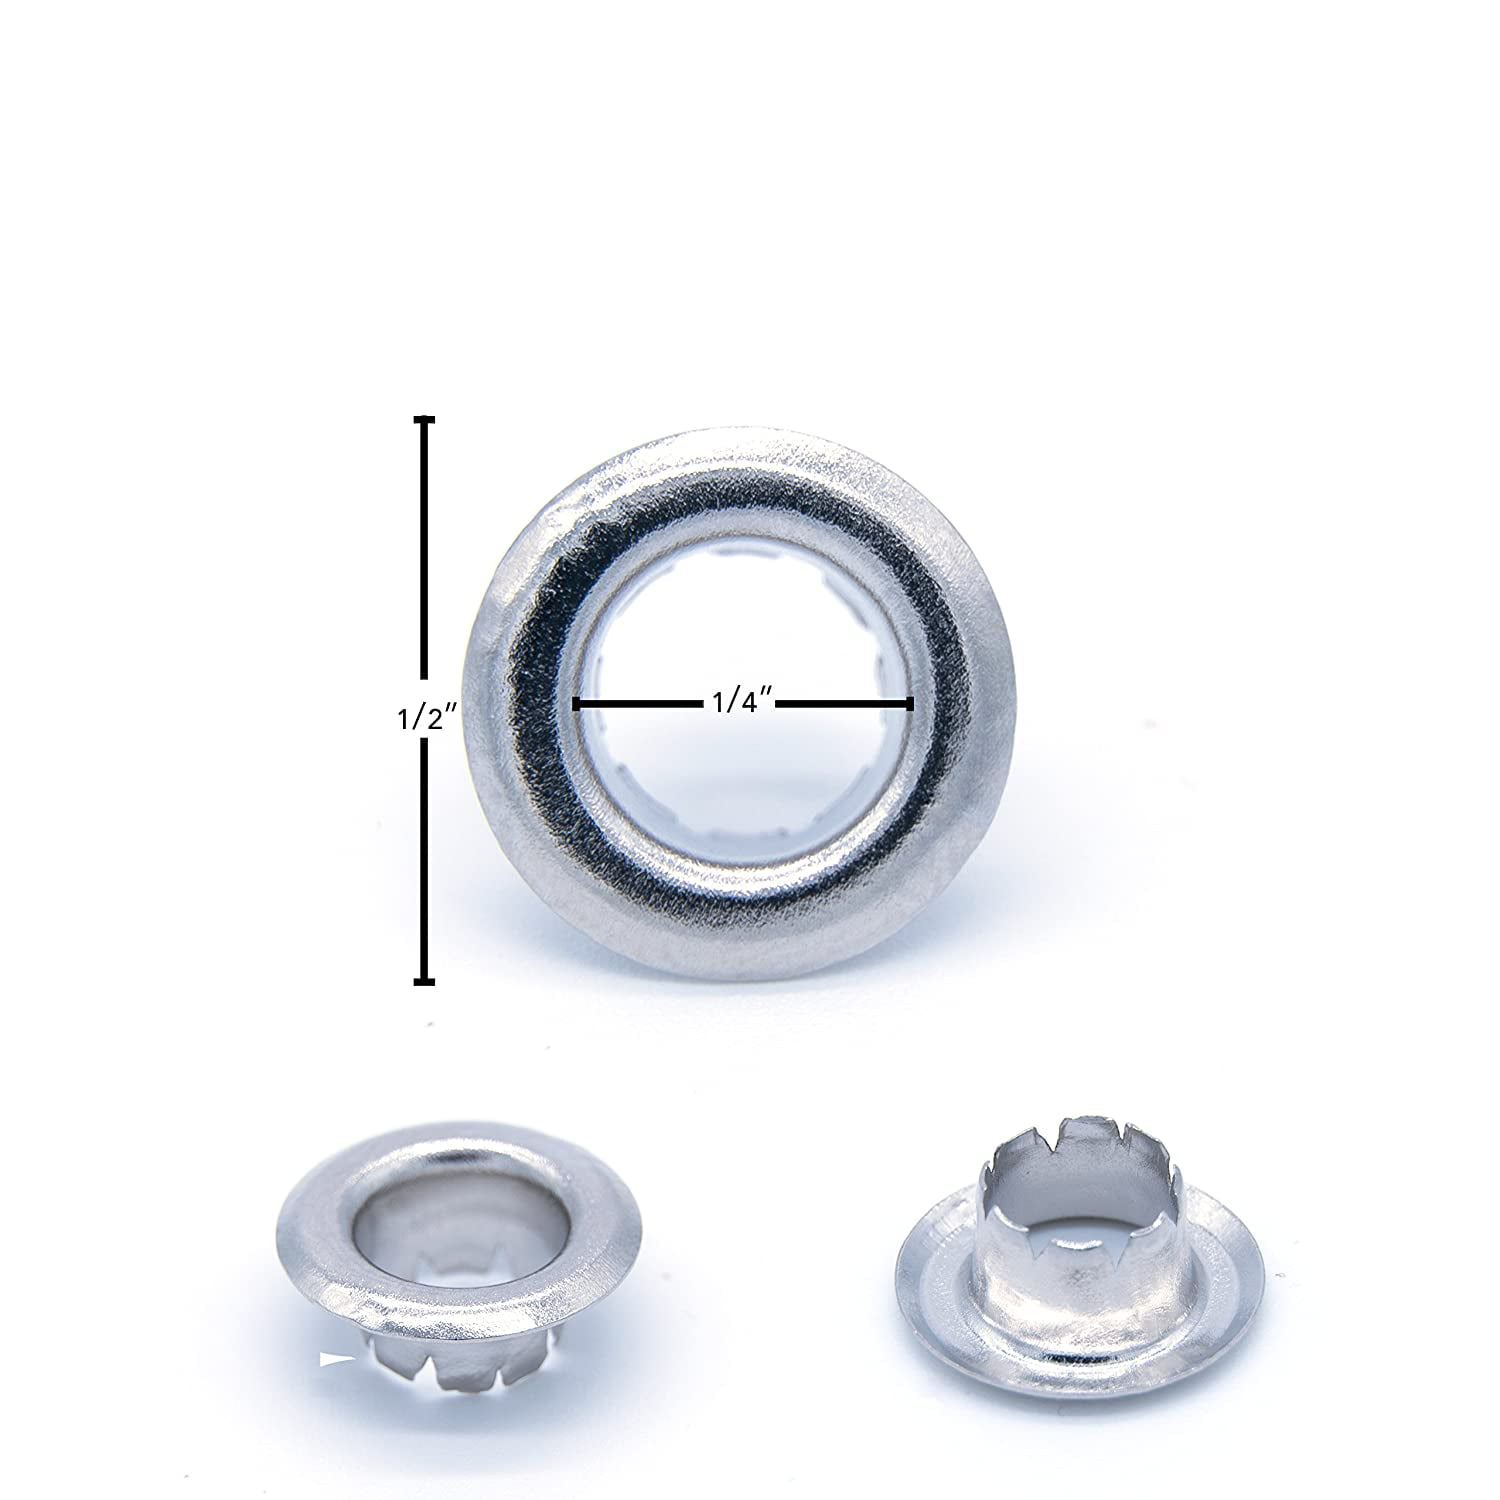 Cap Rivet Setter Eyelet Grommet Setter 4-5-6-8-10-12-15mmsizes With Hole  Punch, Awl, and Mallet Options P 